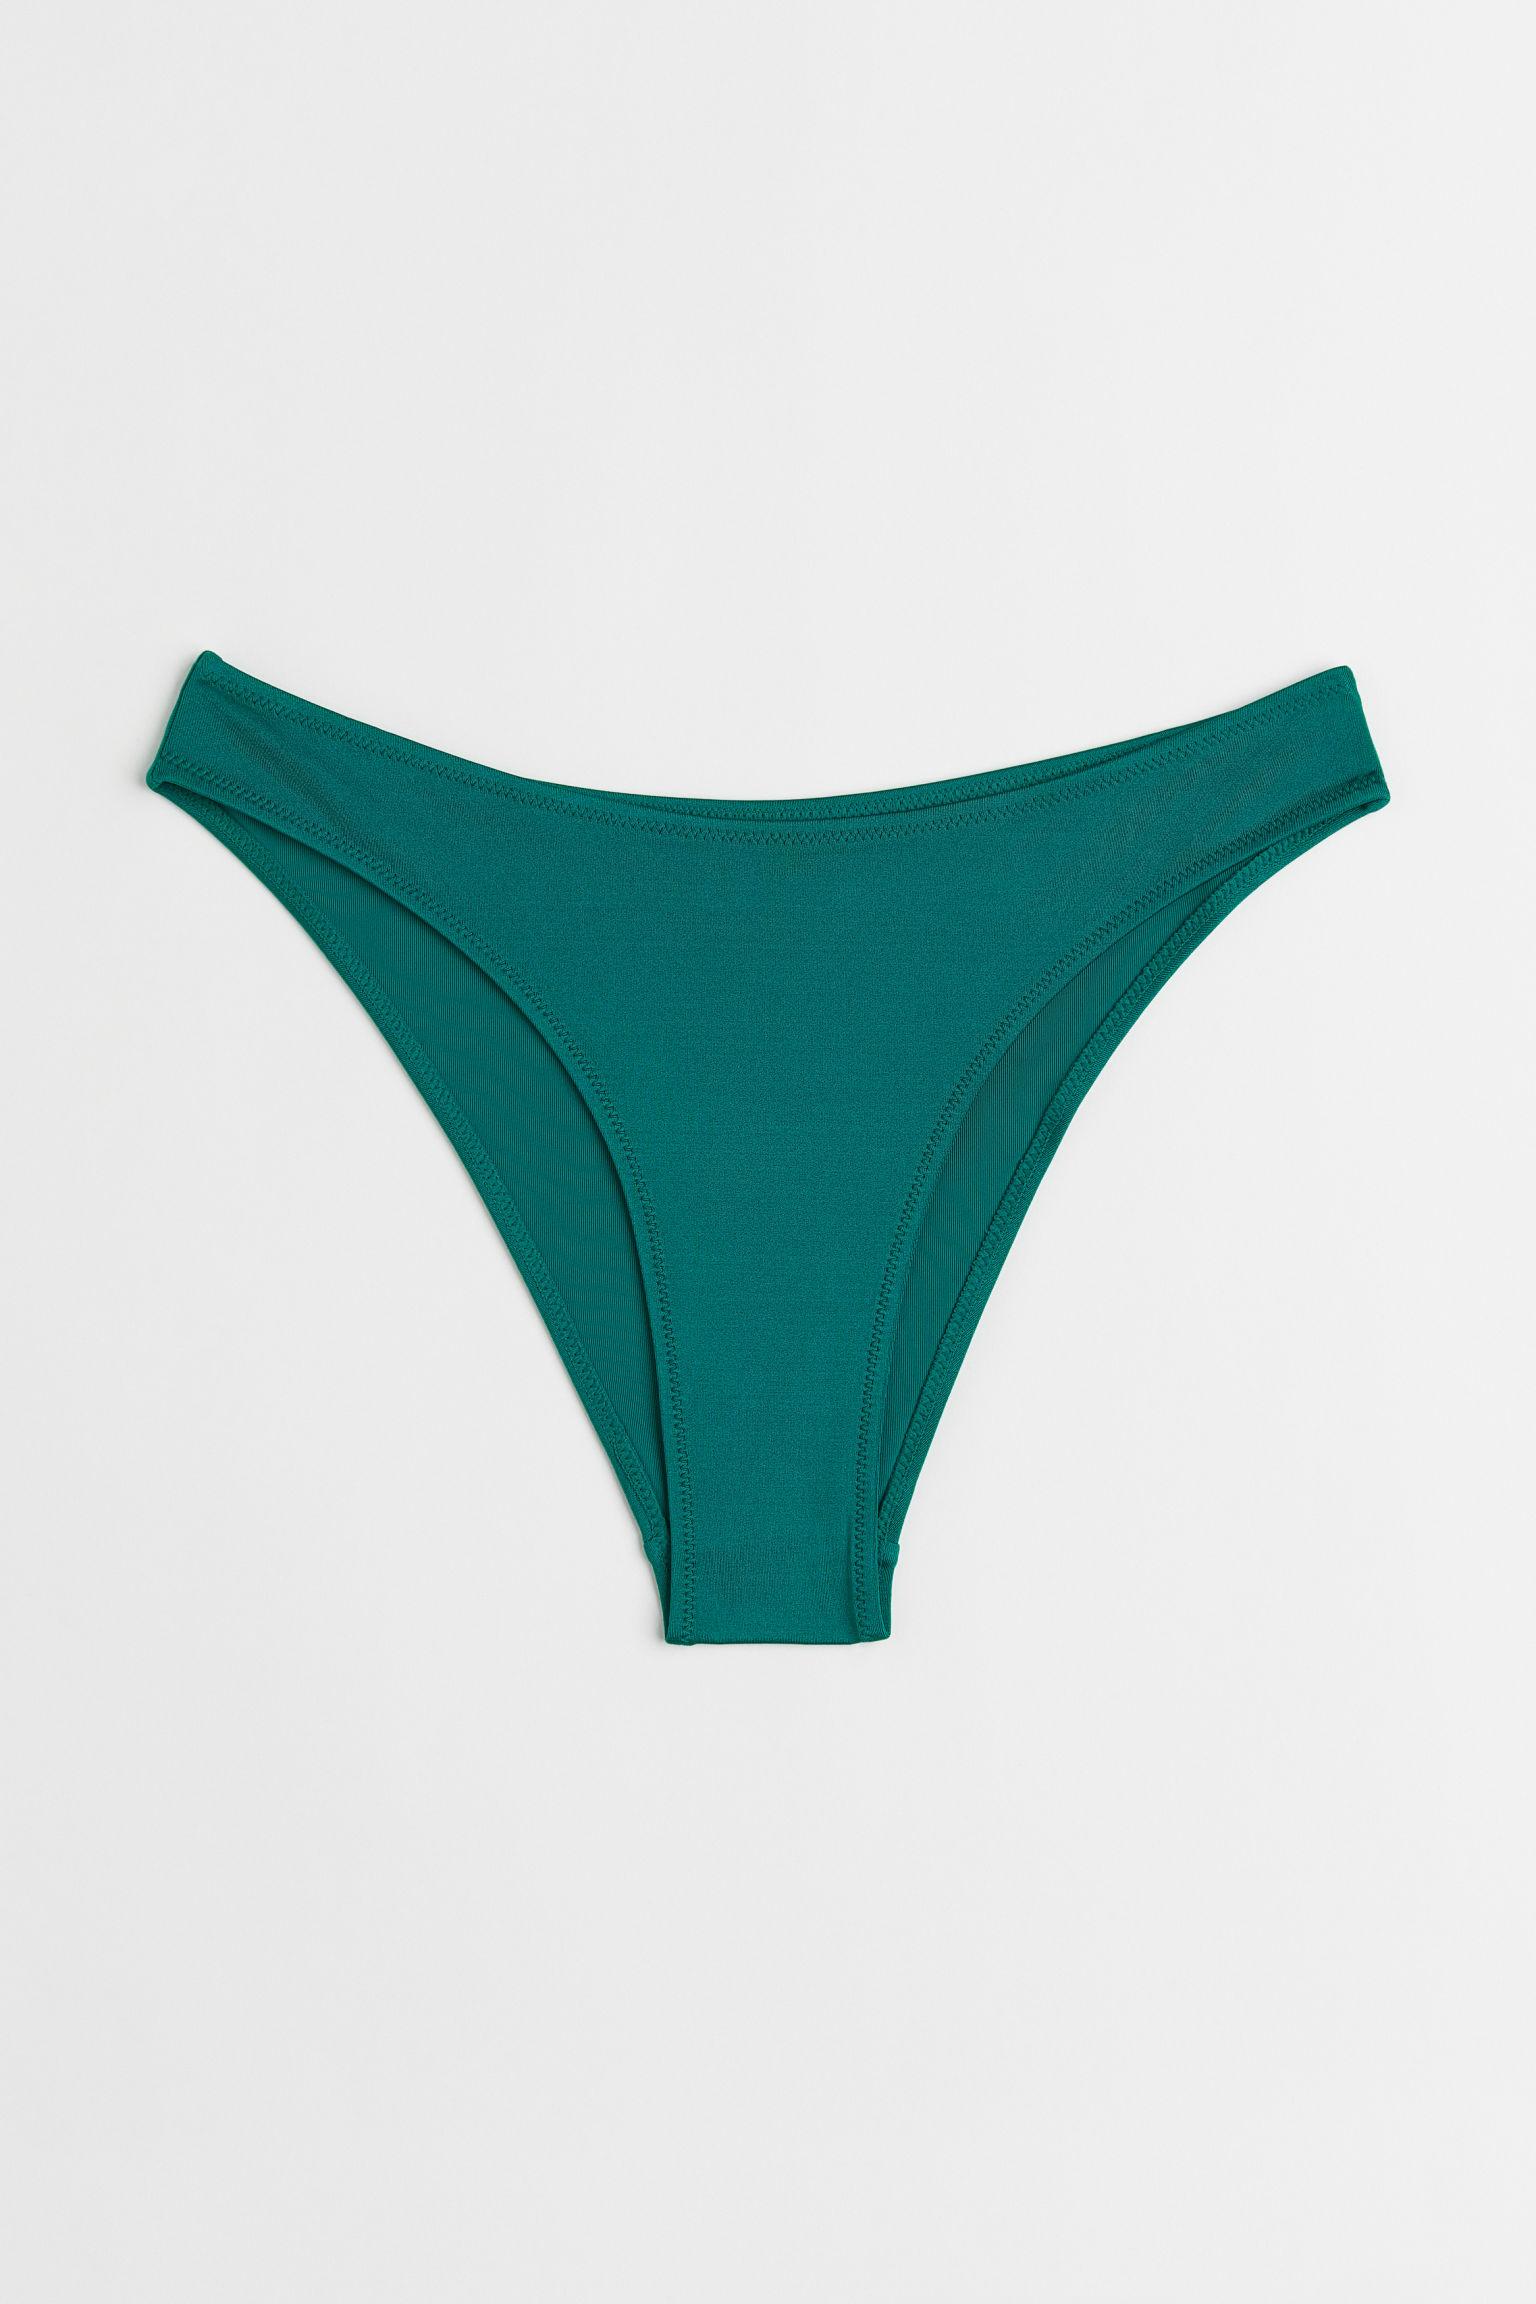 H&M Bikini Bottoms in Green | Lyst Canada